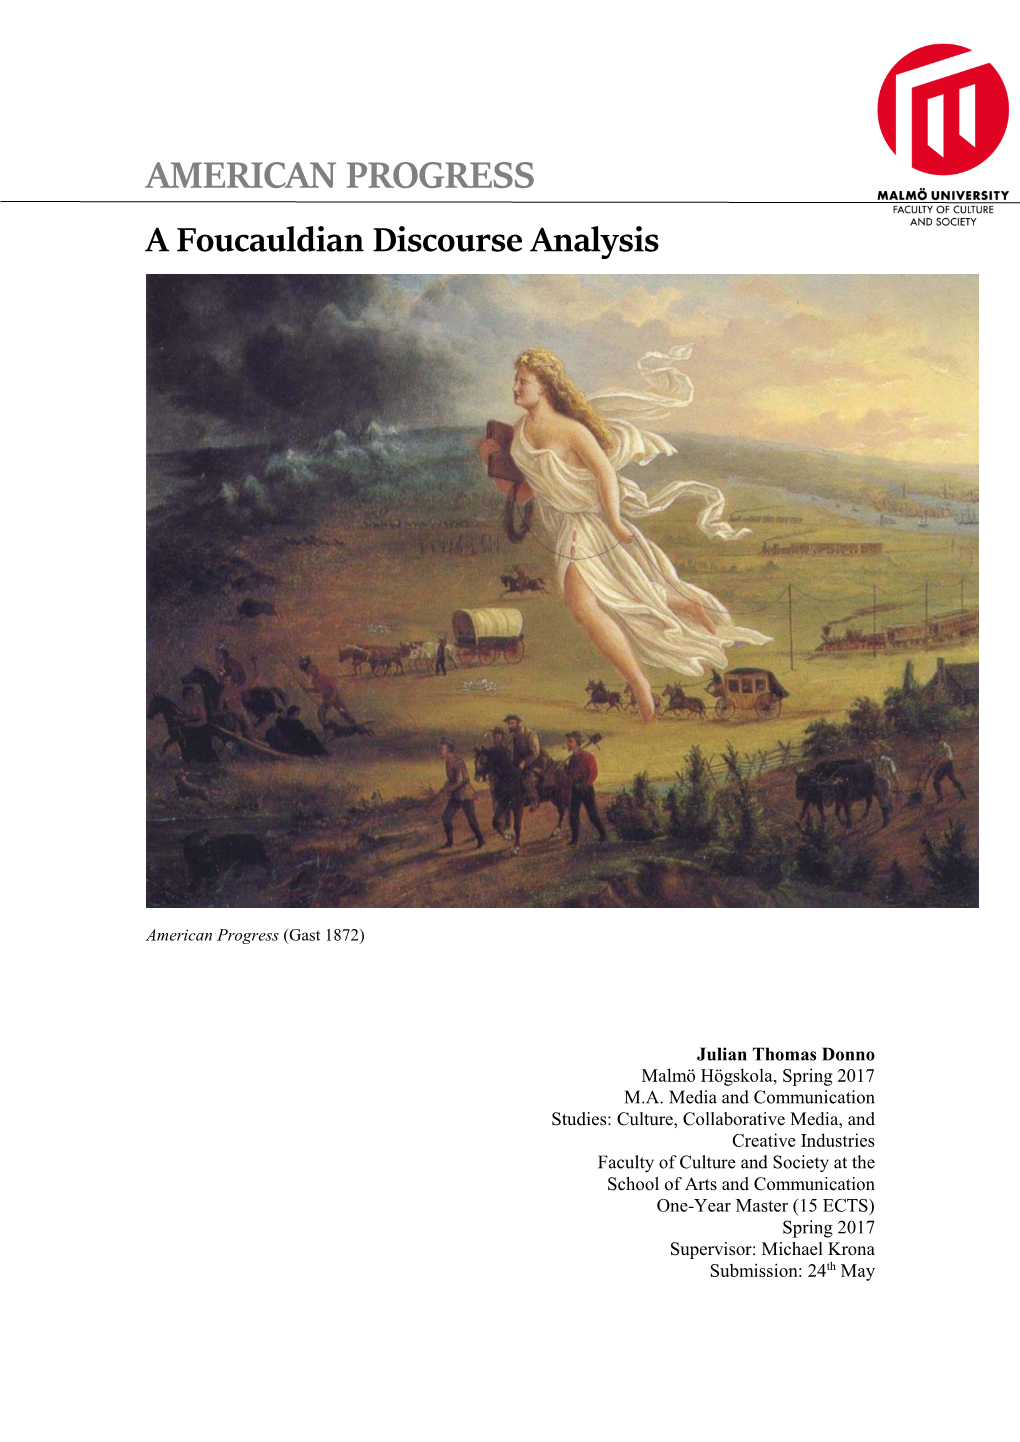 AMERICAN PROGRESS a Foucauldian Discourse Analysis